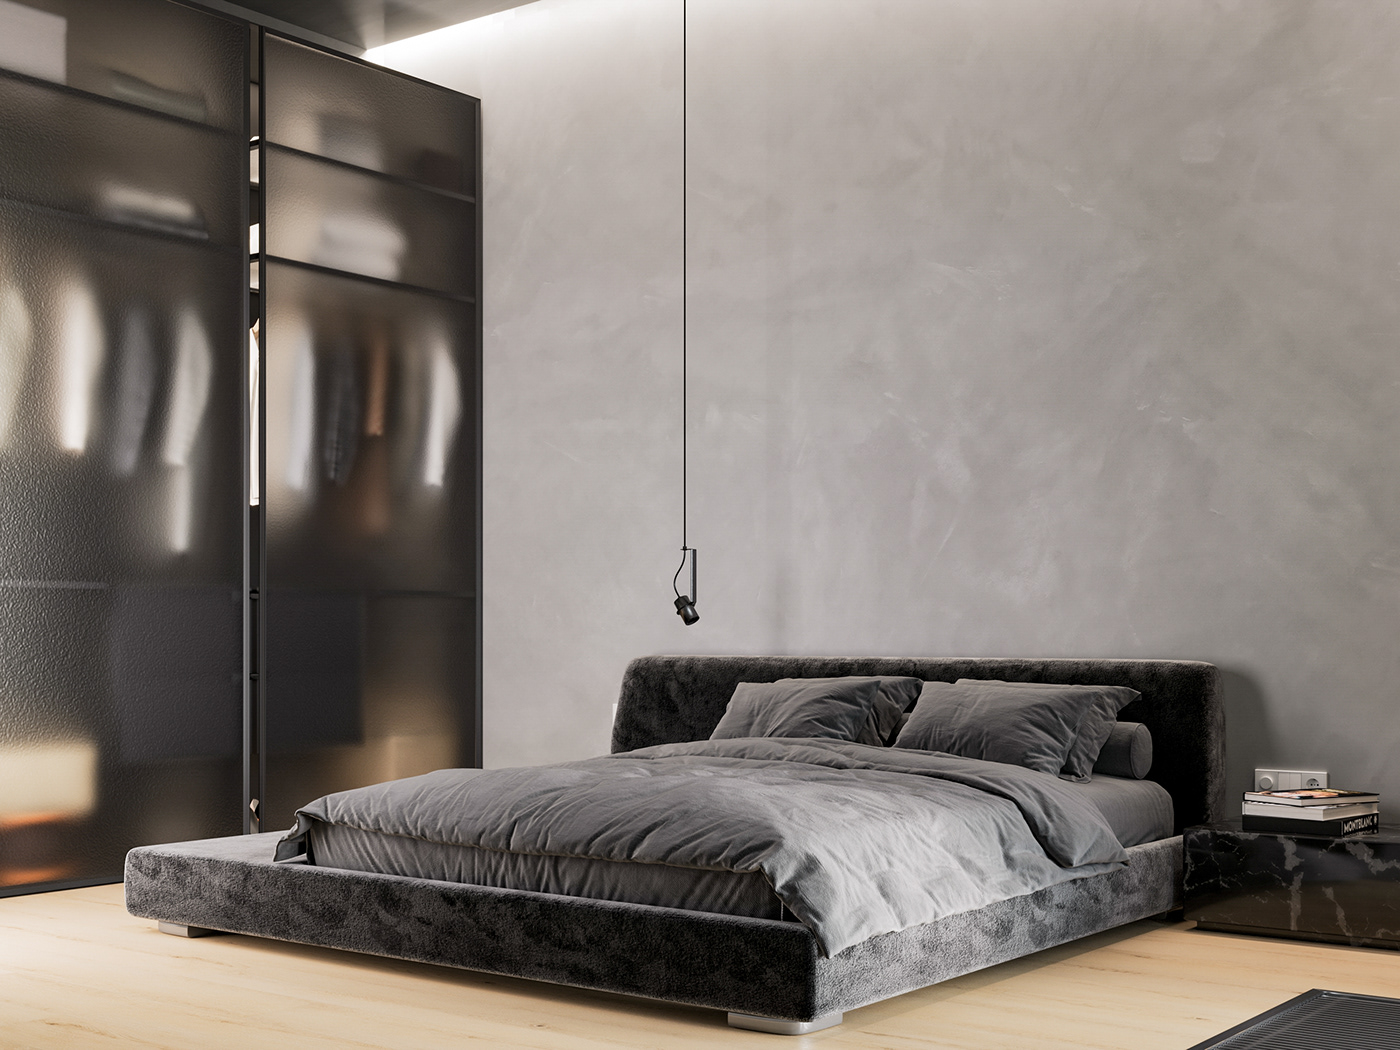 3ds max archviz bedroom corona render  Interior interior design  visualization визуализация дизайн интерьера